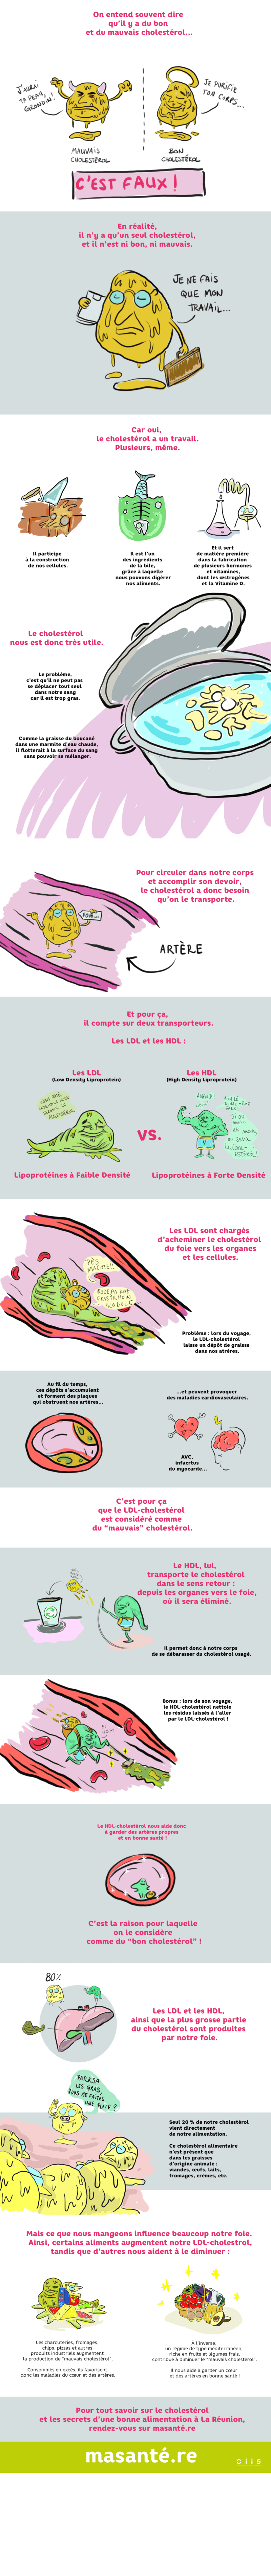 infographie-cholesterol-explication-bon-mauvais